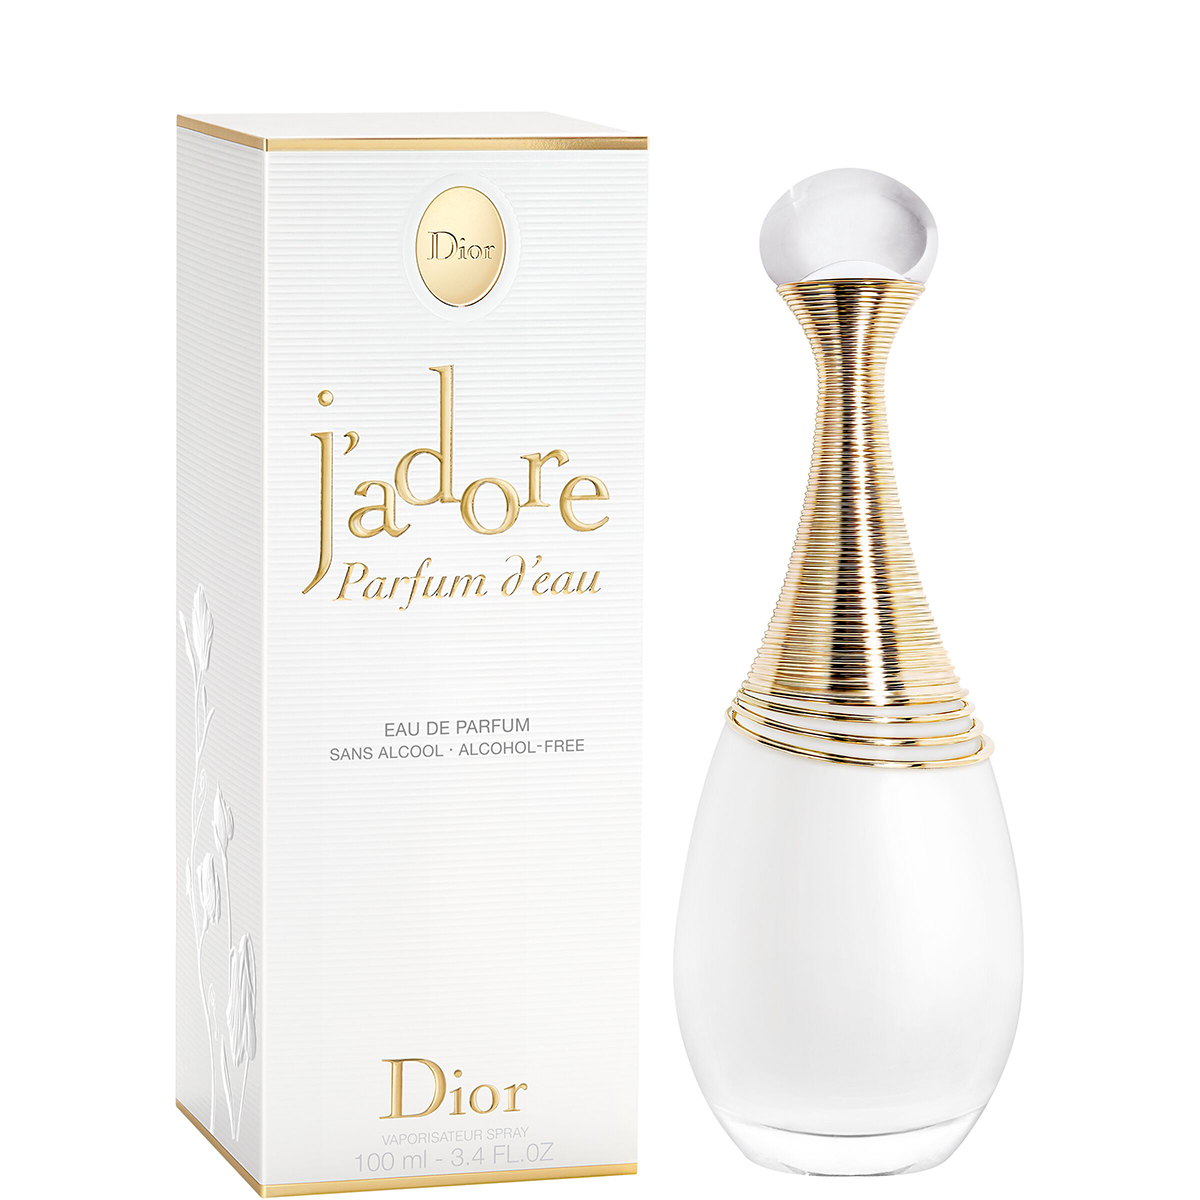 Dior JAdore Parfum Deau